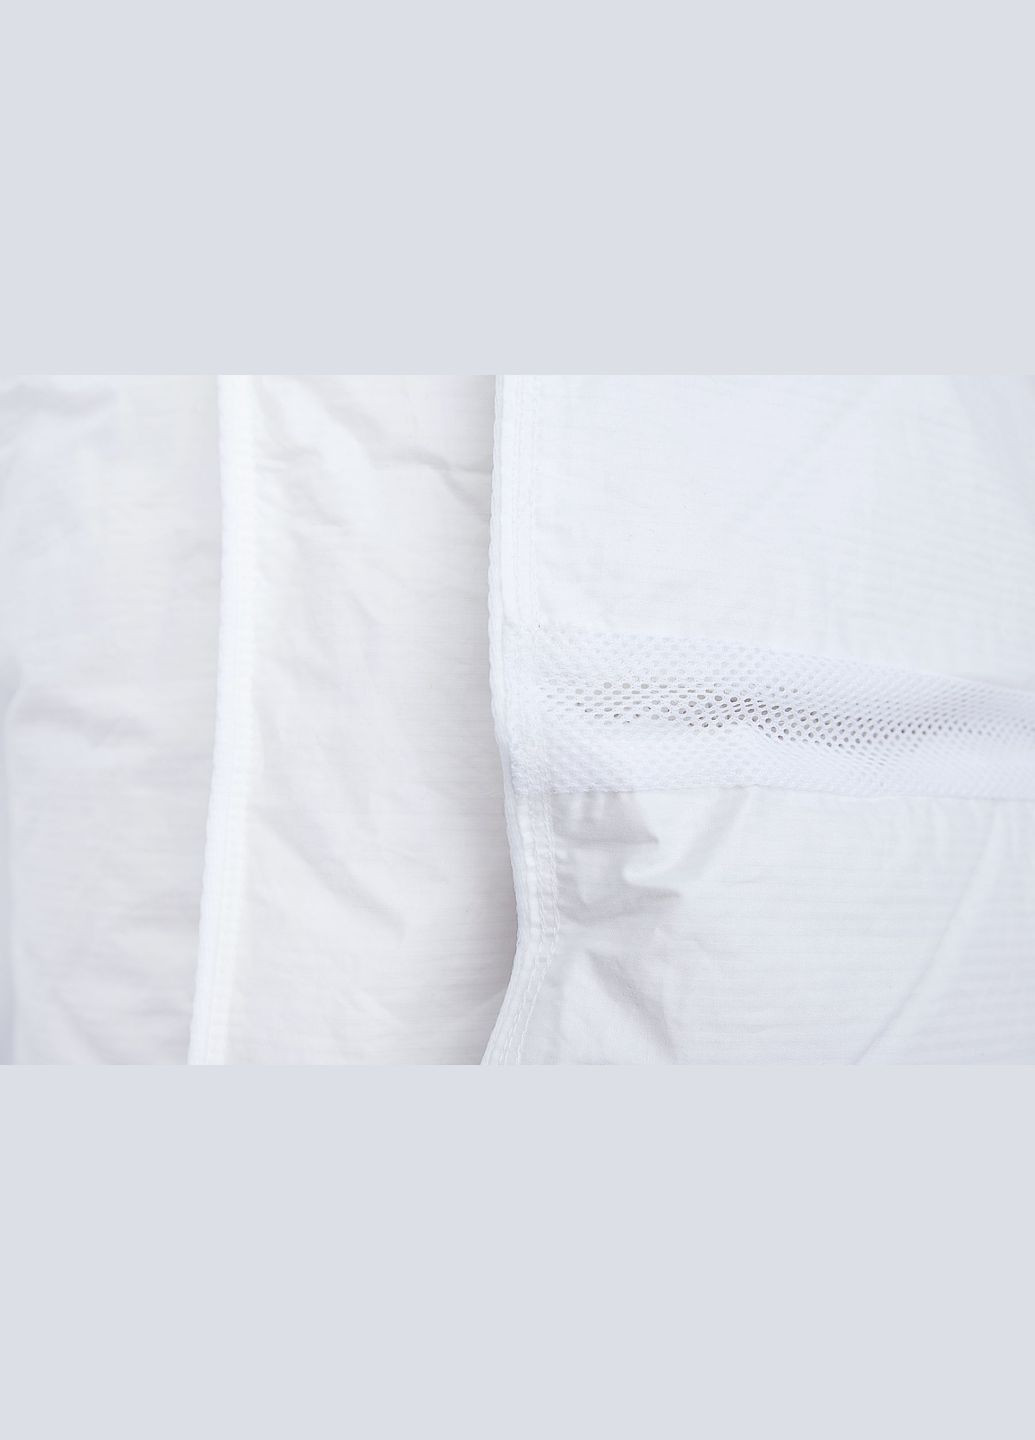 Одеяло пуховое со 100% белым пухом Royal Series Climatecomfort 200х220 (20022010WRS) Iglen (282313354)